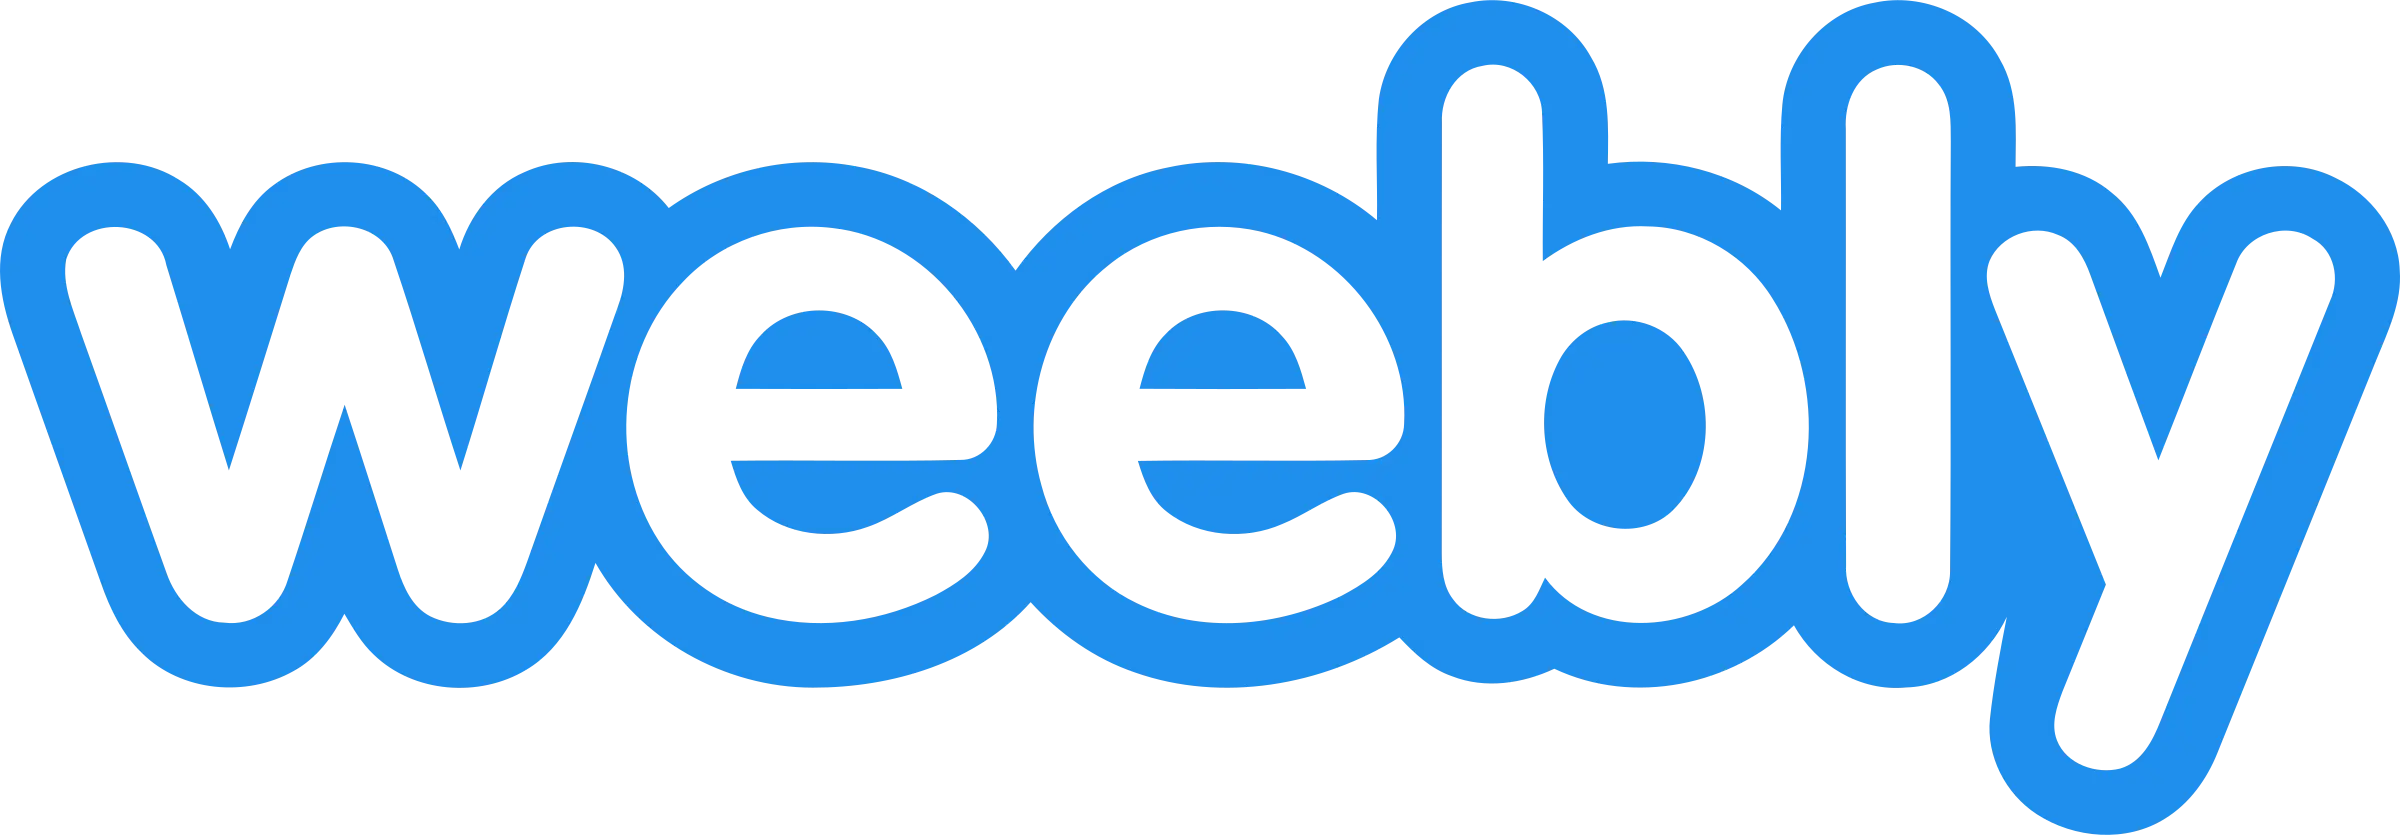 weebly logo png transparent